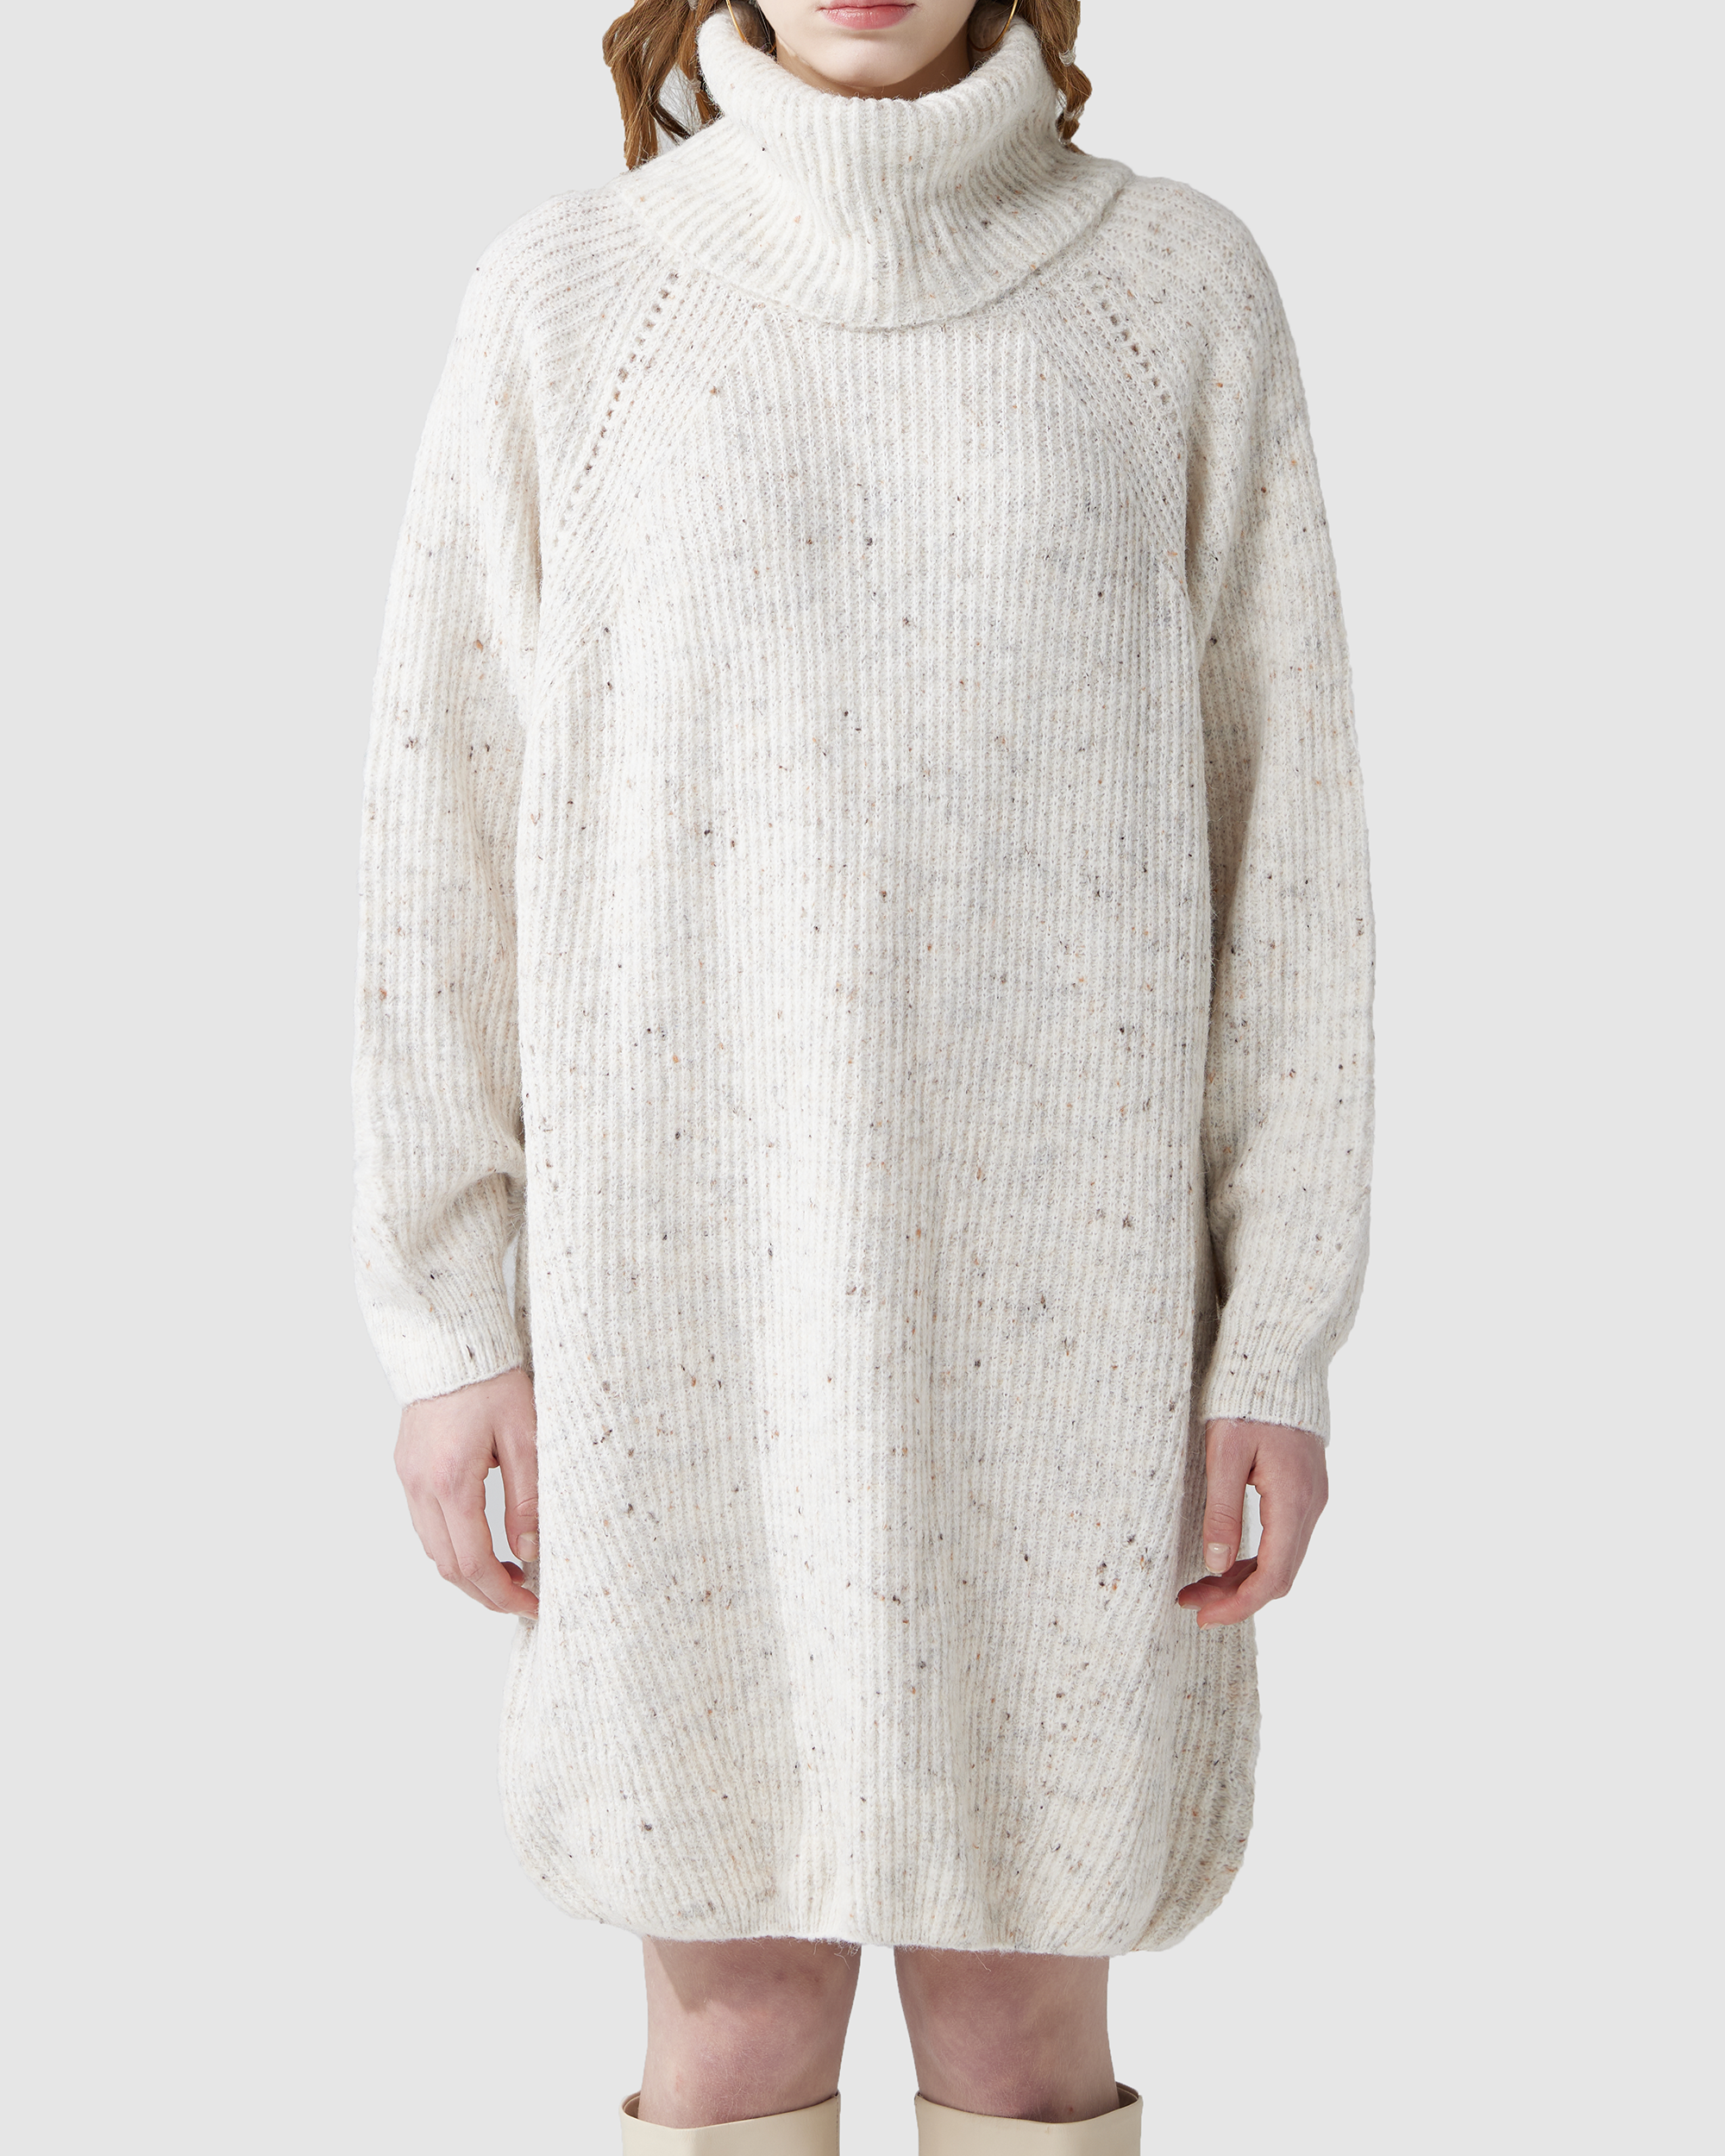 Turtleneck Balloon Sleeve Sweater Dress - Ivory/Cream